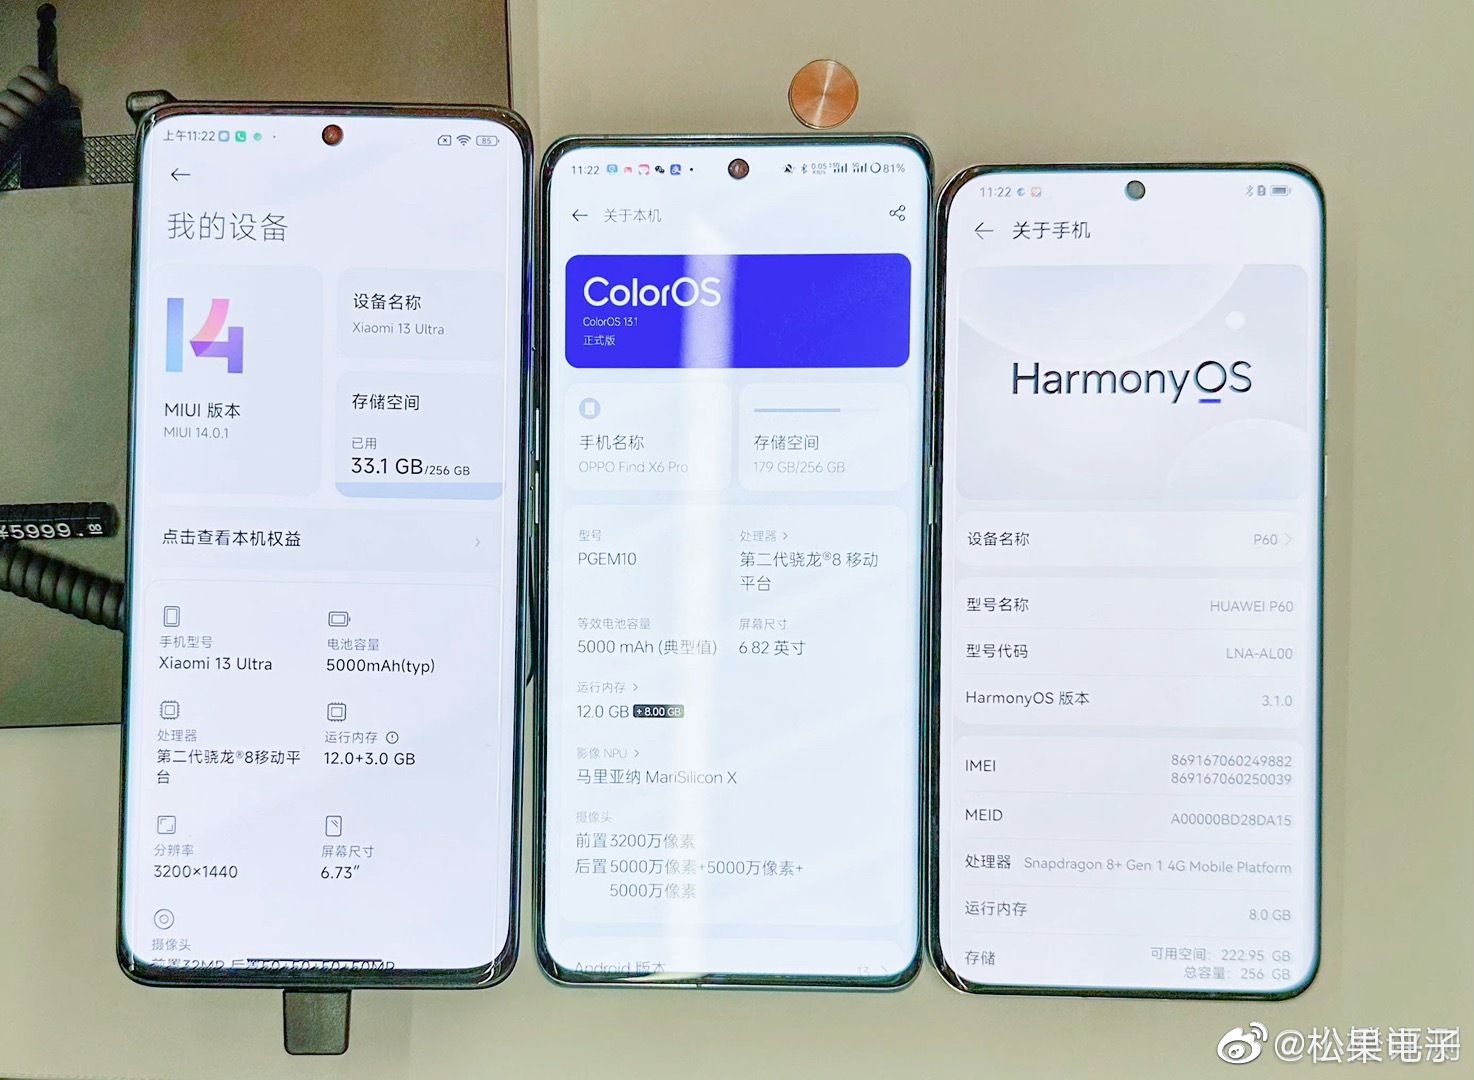 Xiaomi 13 ultra сравнить